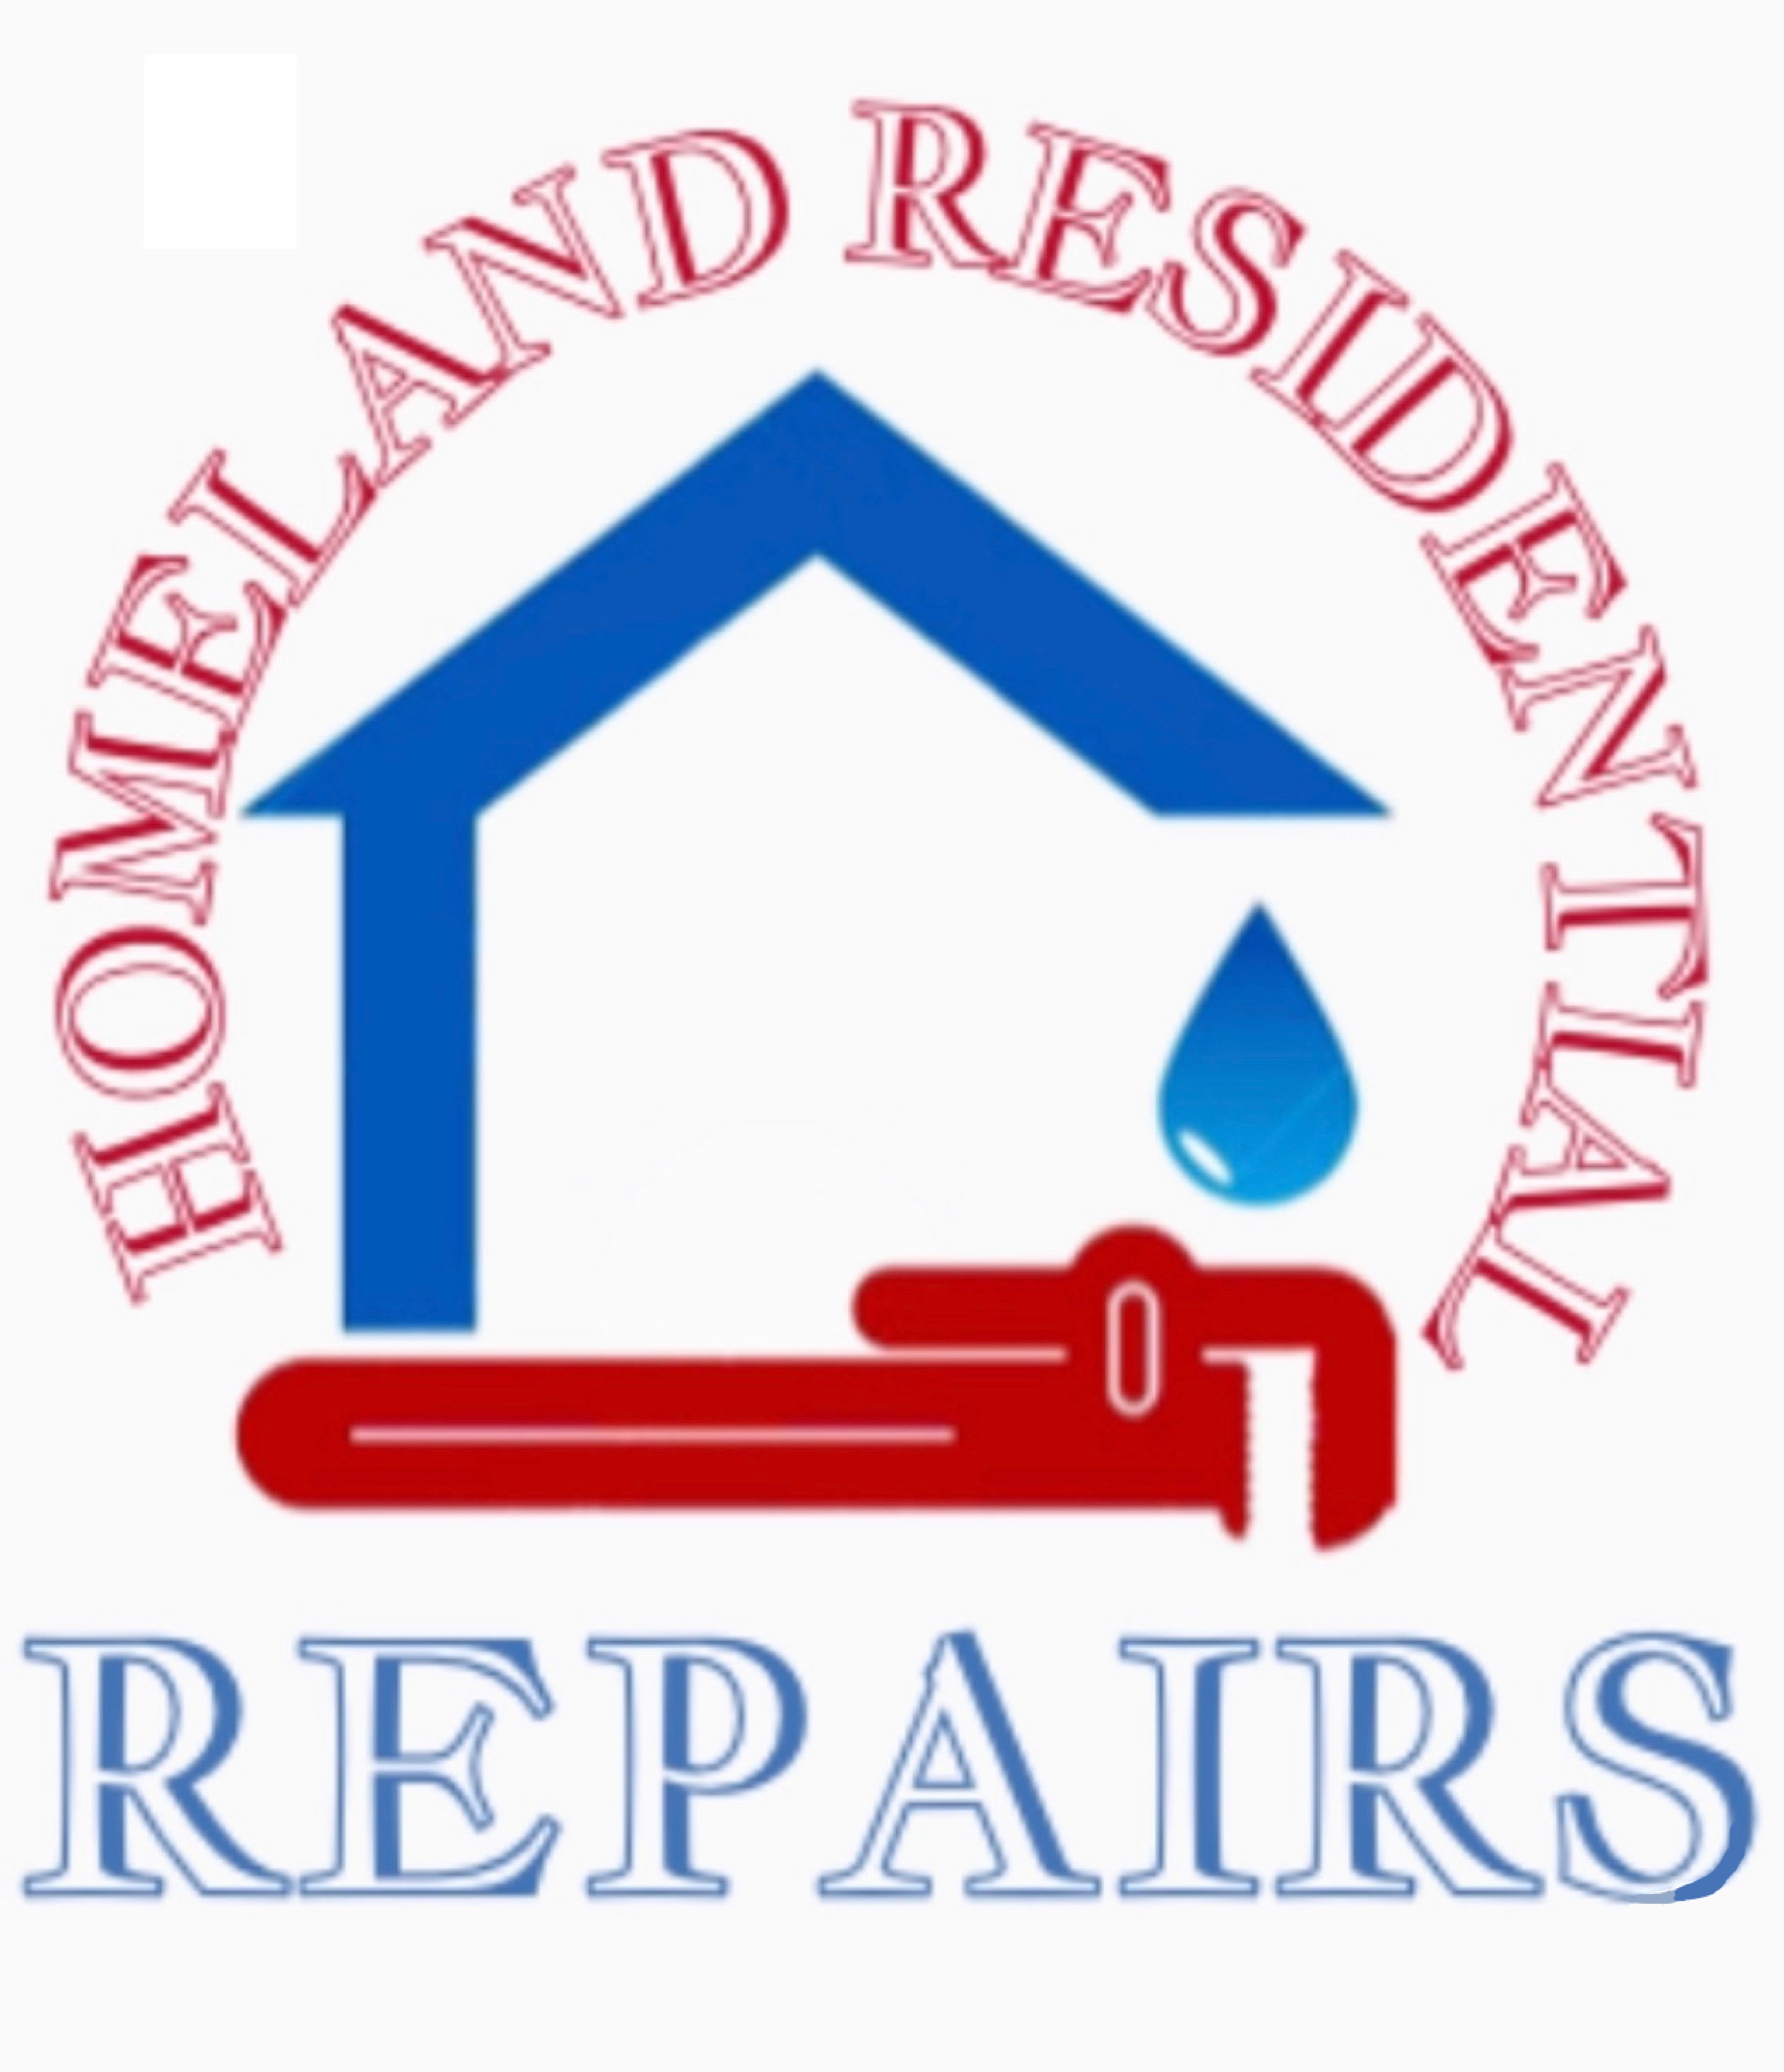 Homeland Residental Repairs Logo